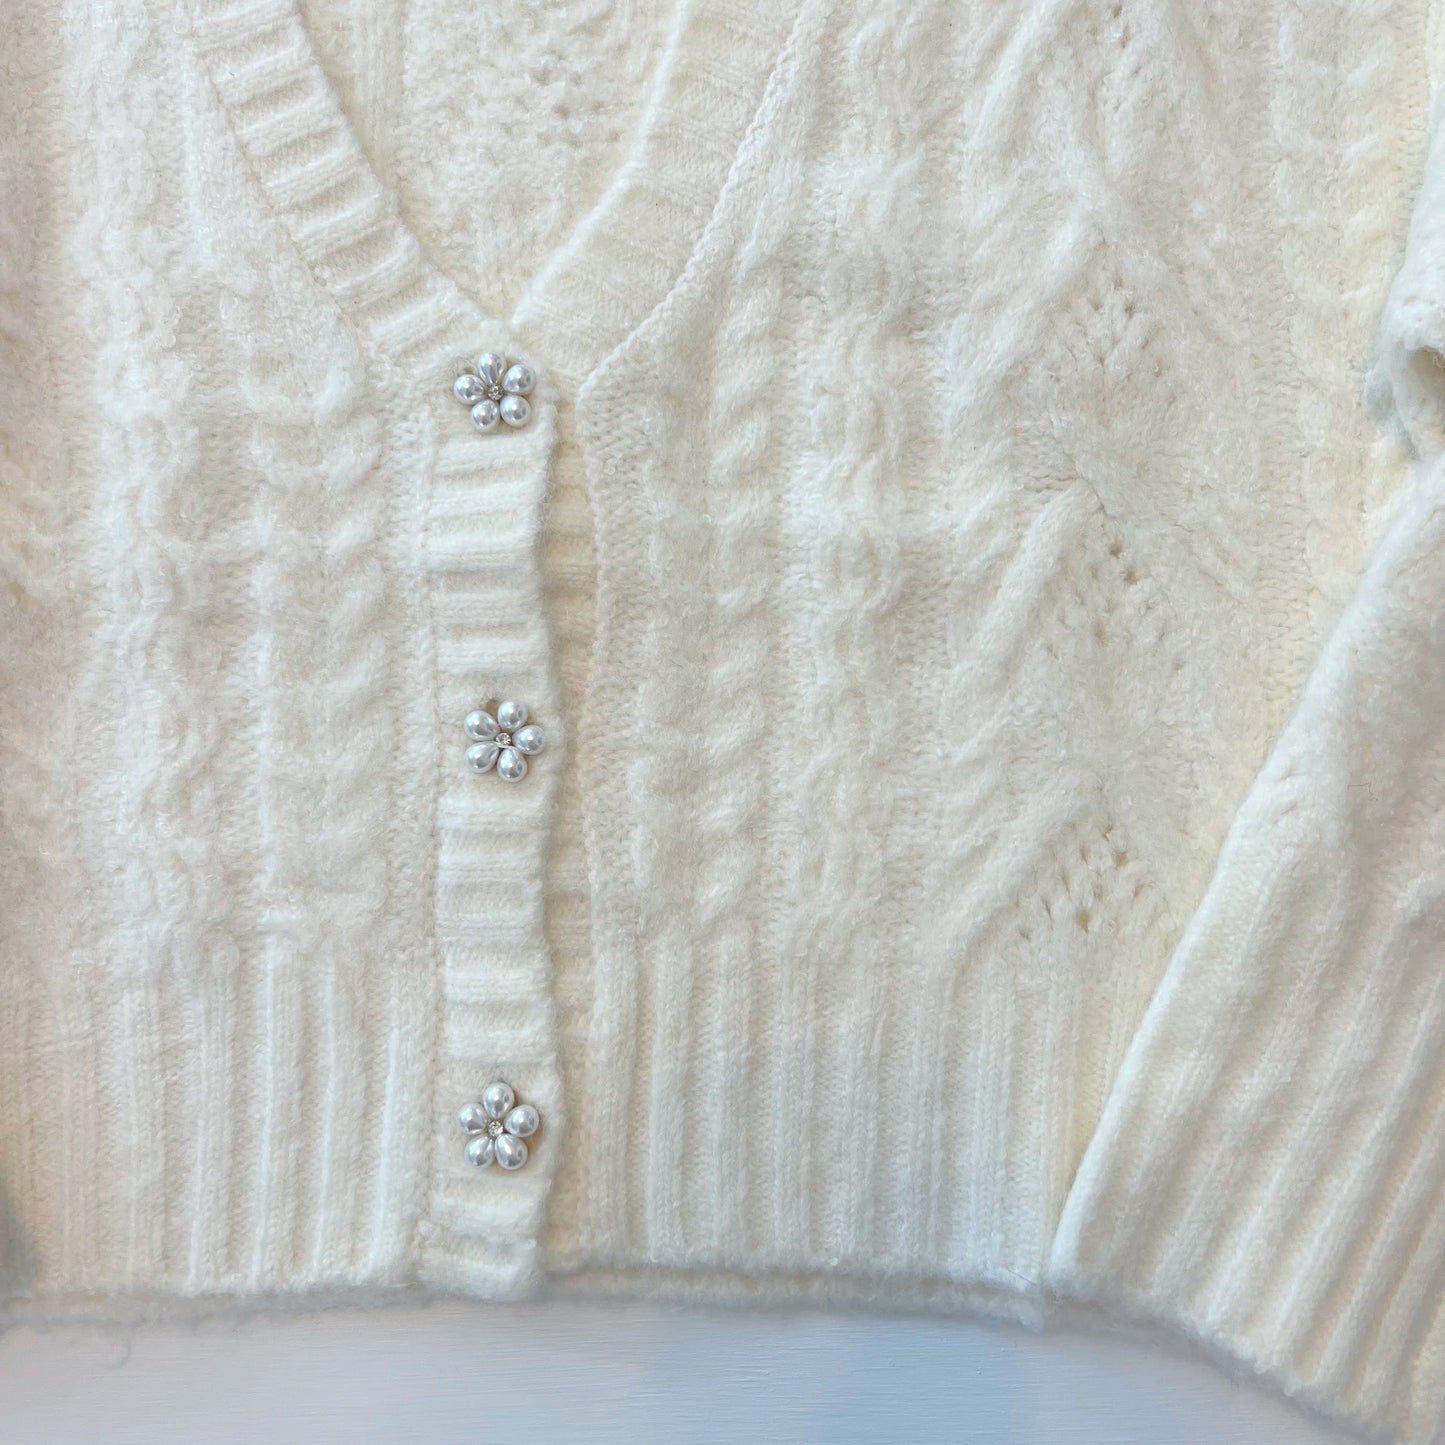 Emmet Jeweled Cardigan Sweater